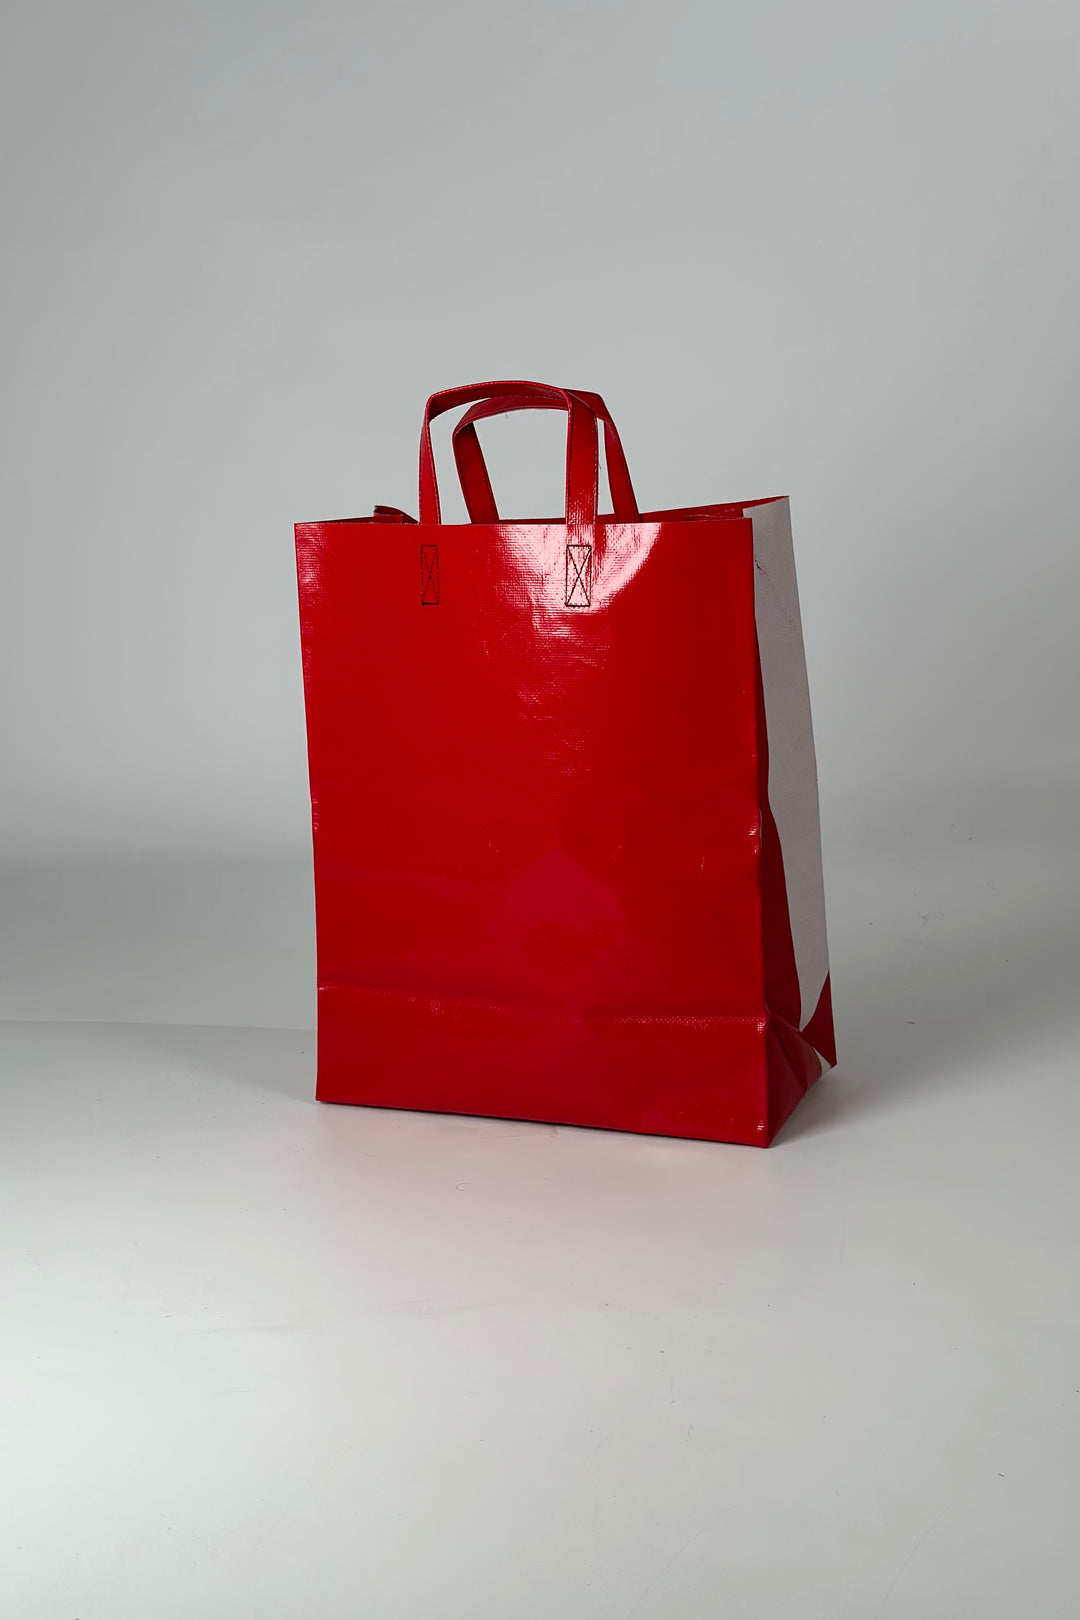 MIAMI VICE F52 Shopping Bag